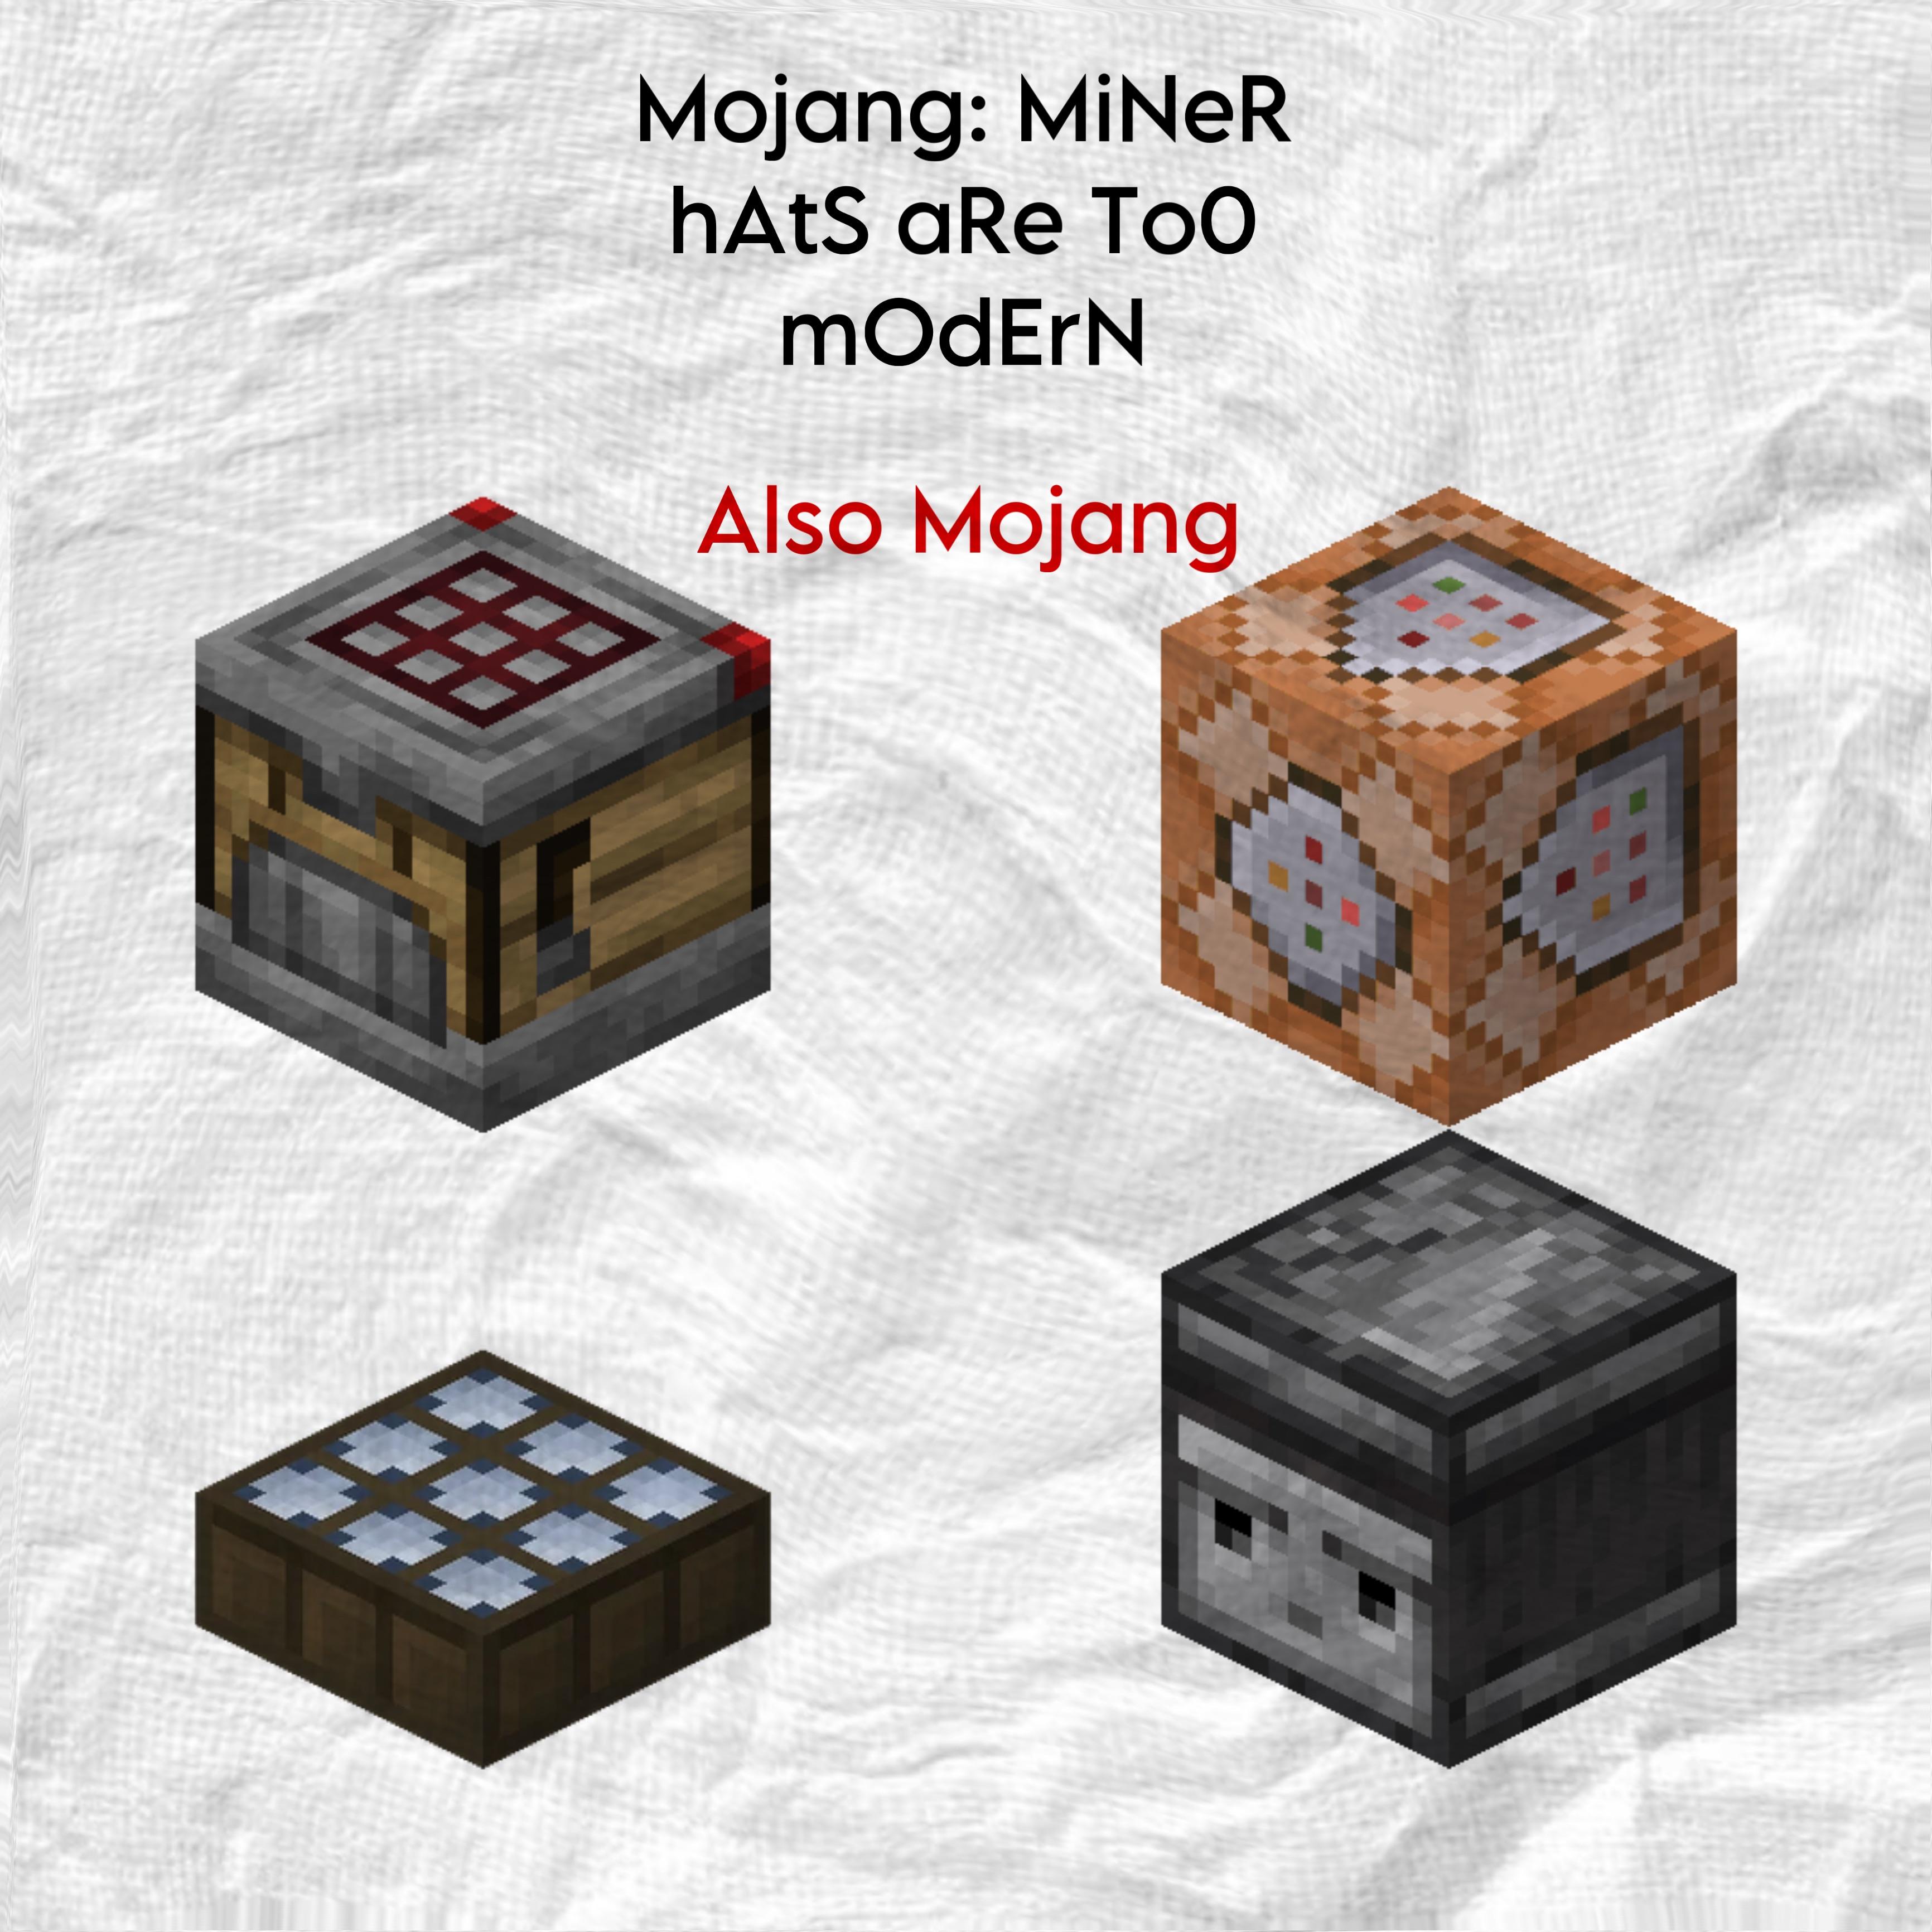 Minecraft Memes - Why Moyang?